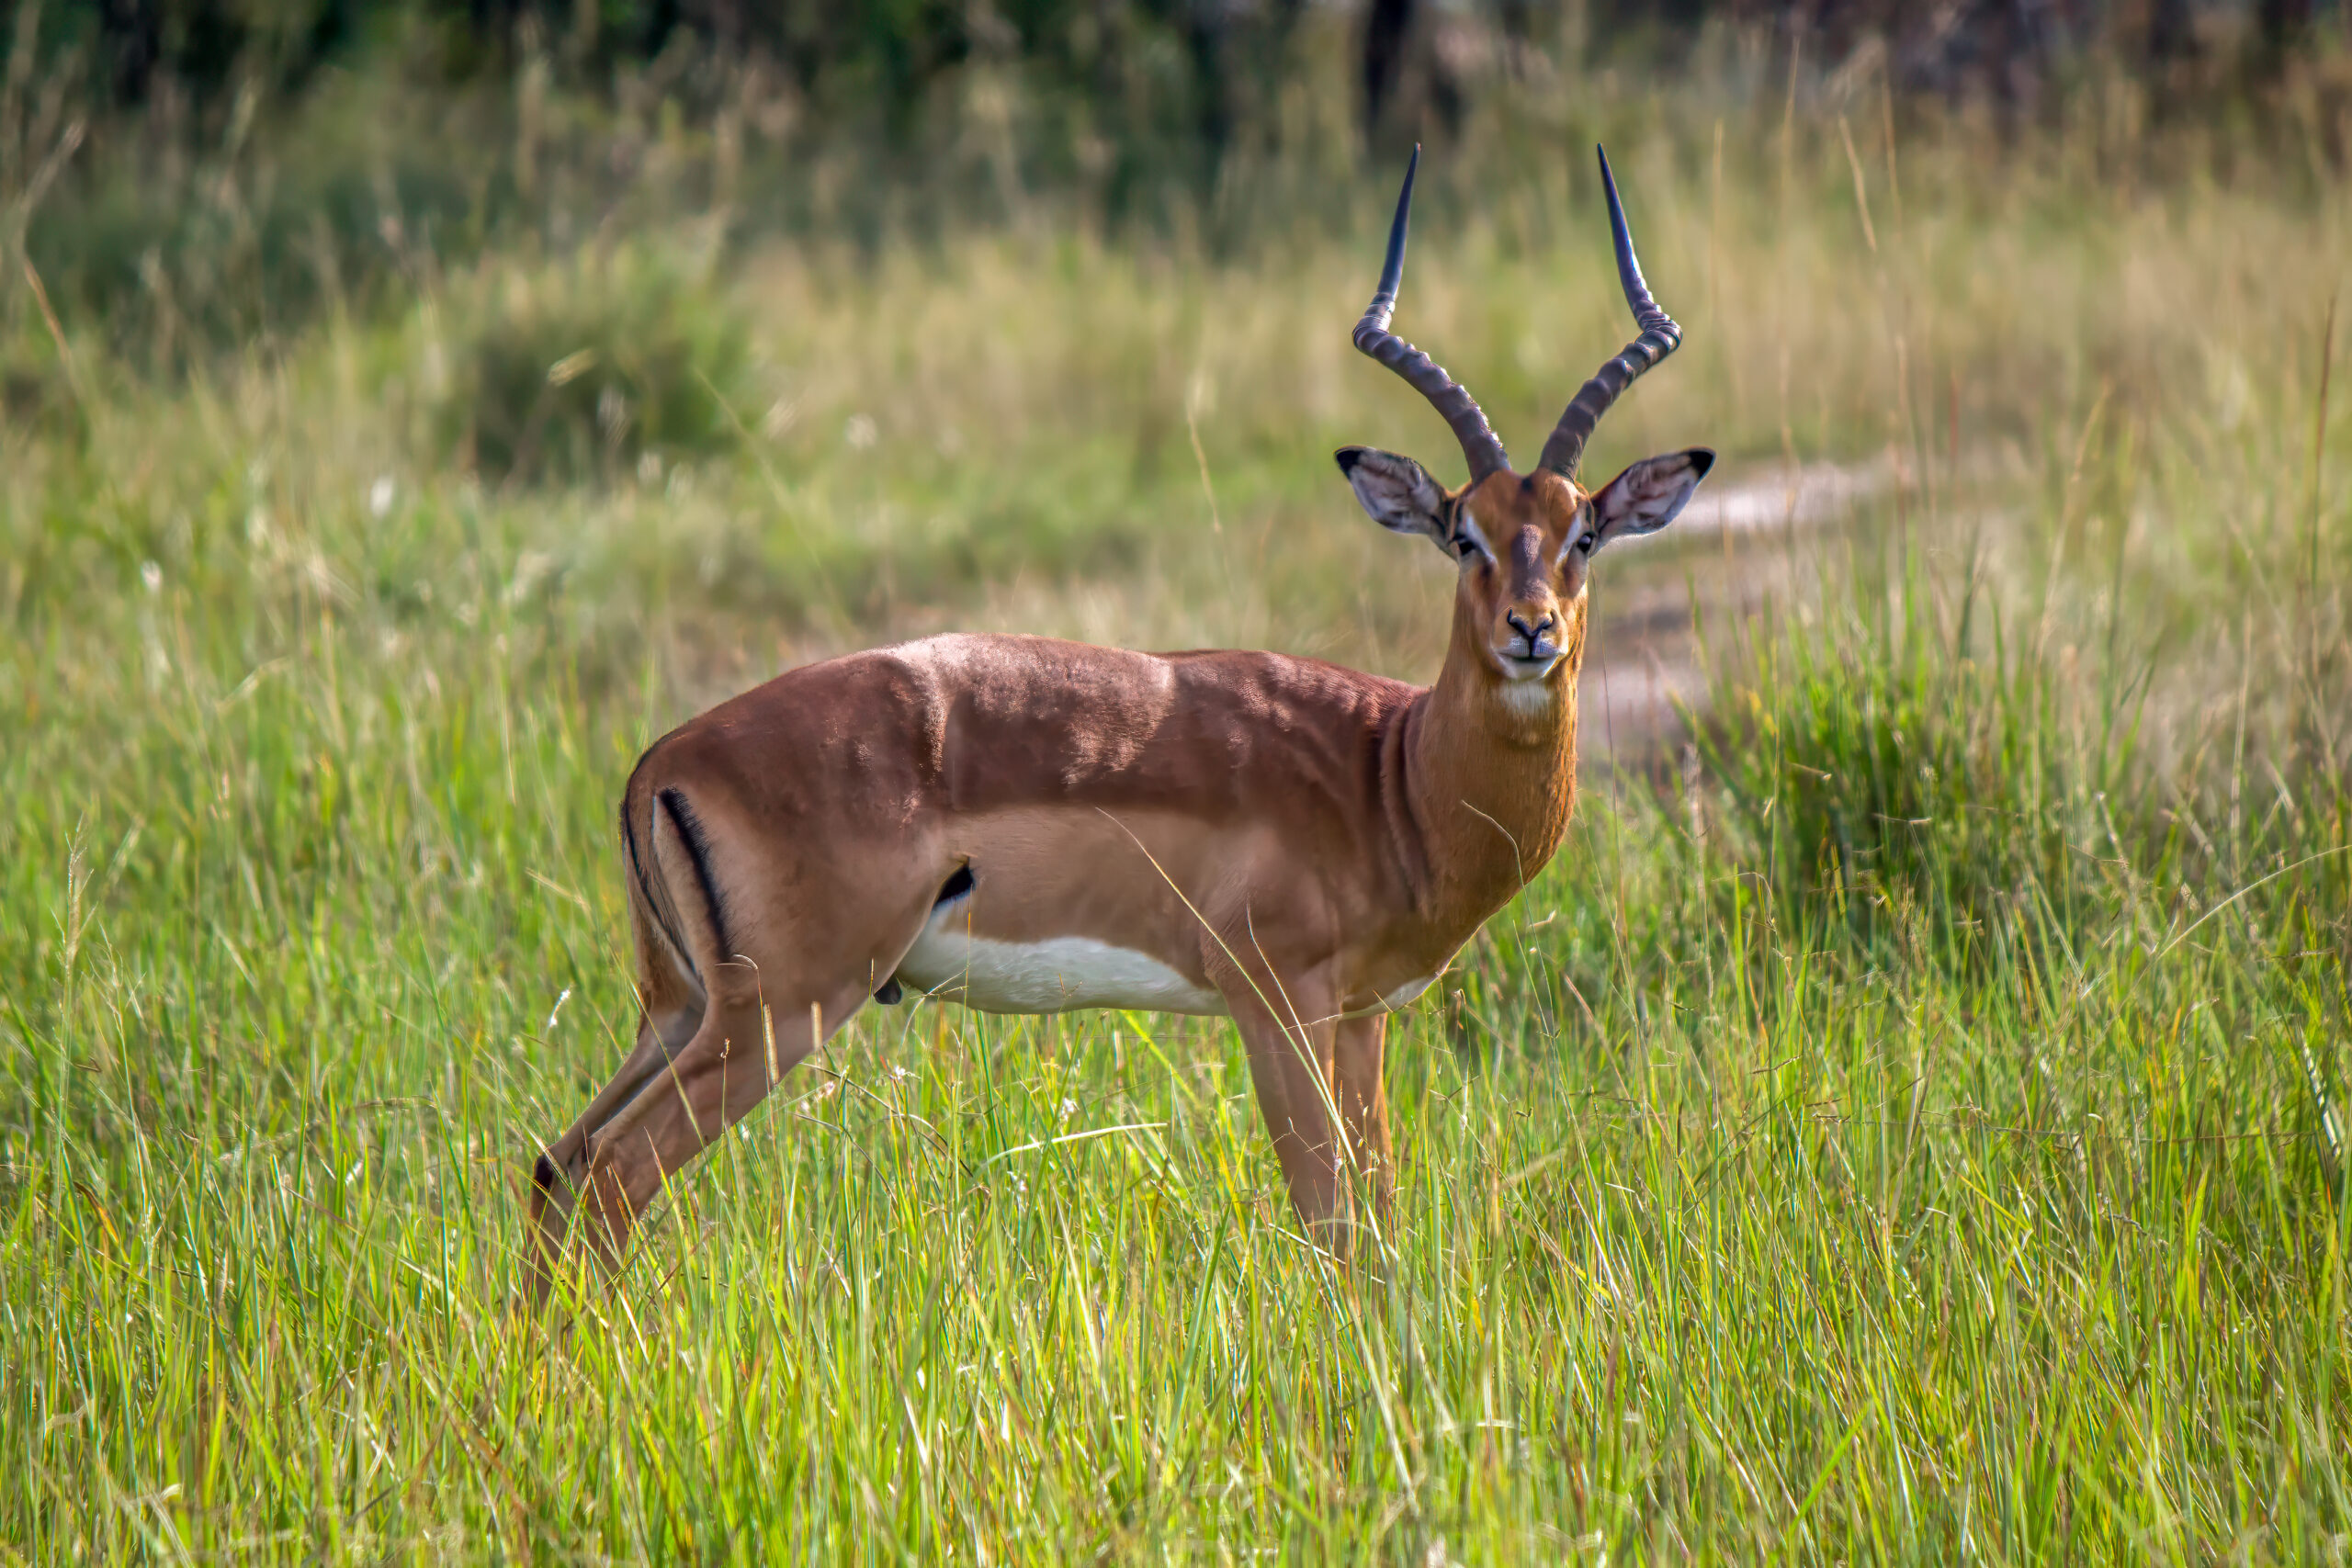 Impala (Aepyceros melampus) @ Tembe Elephant Park, South Africa. Photo: Håvard Rosenlund